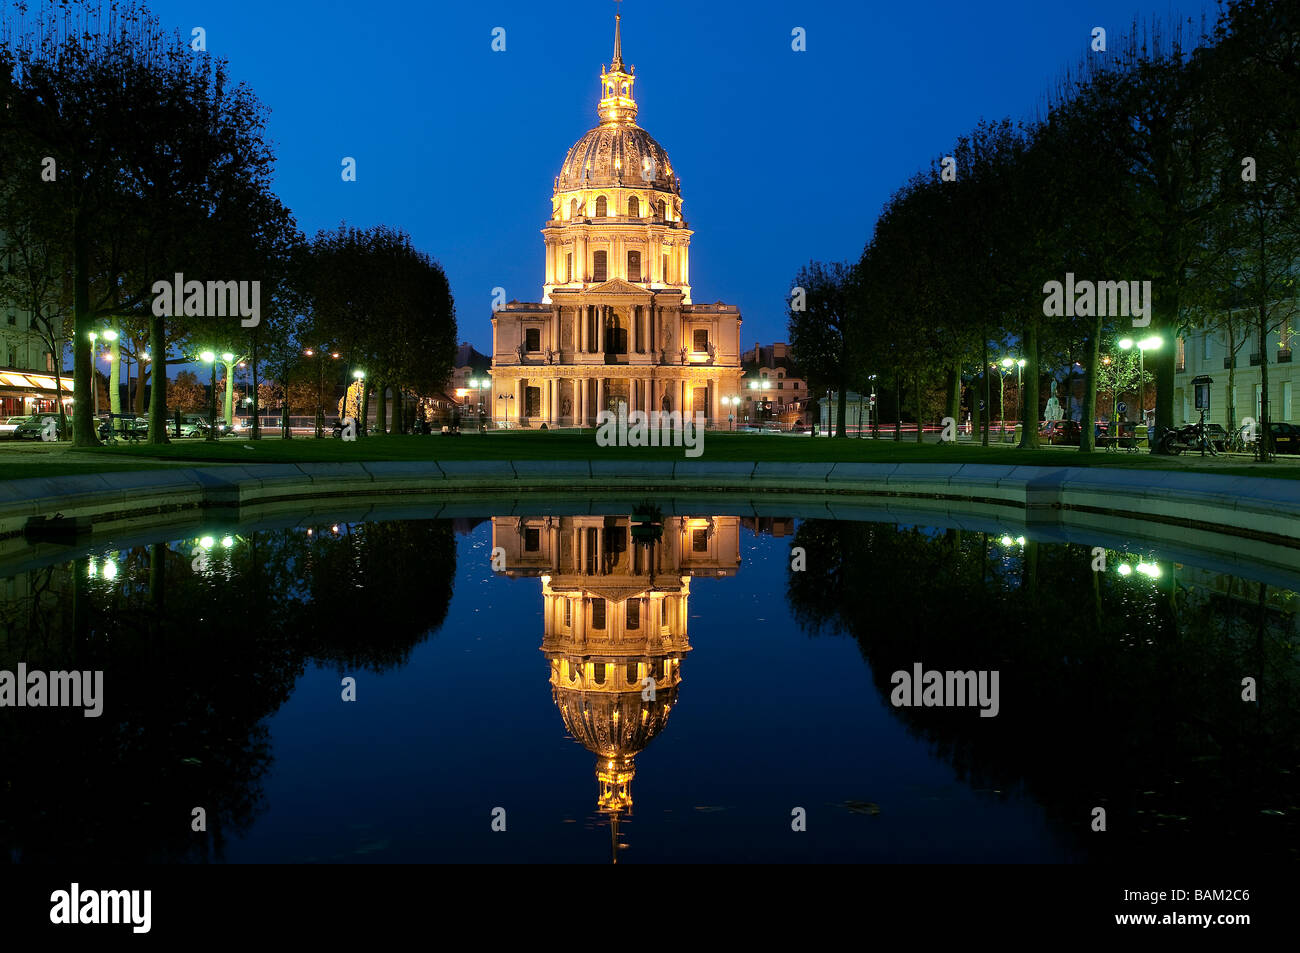 France, Paris, the Invalides illuminated Stock Photo